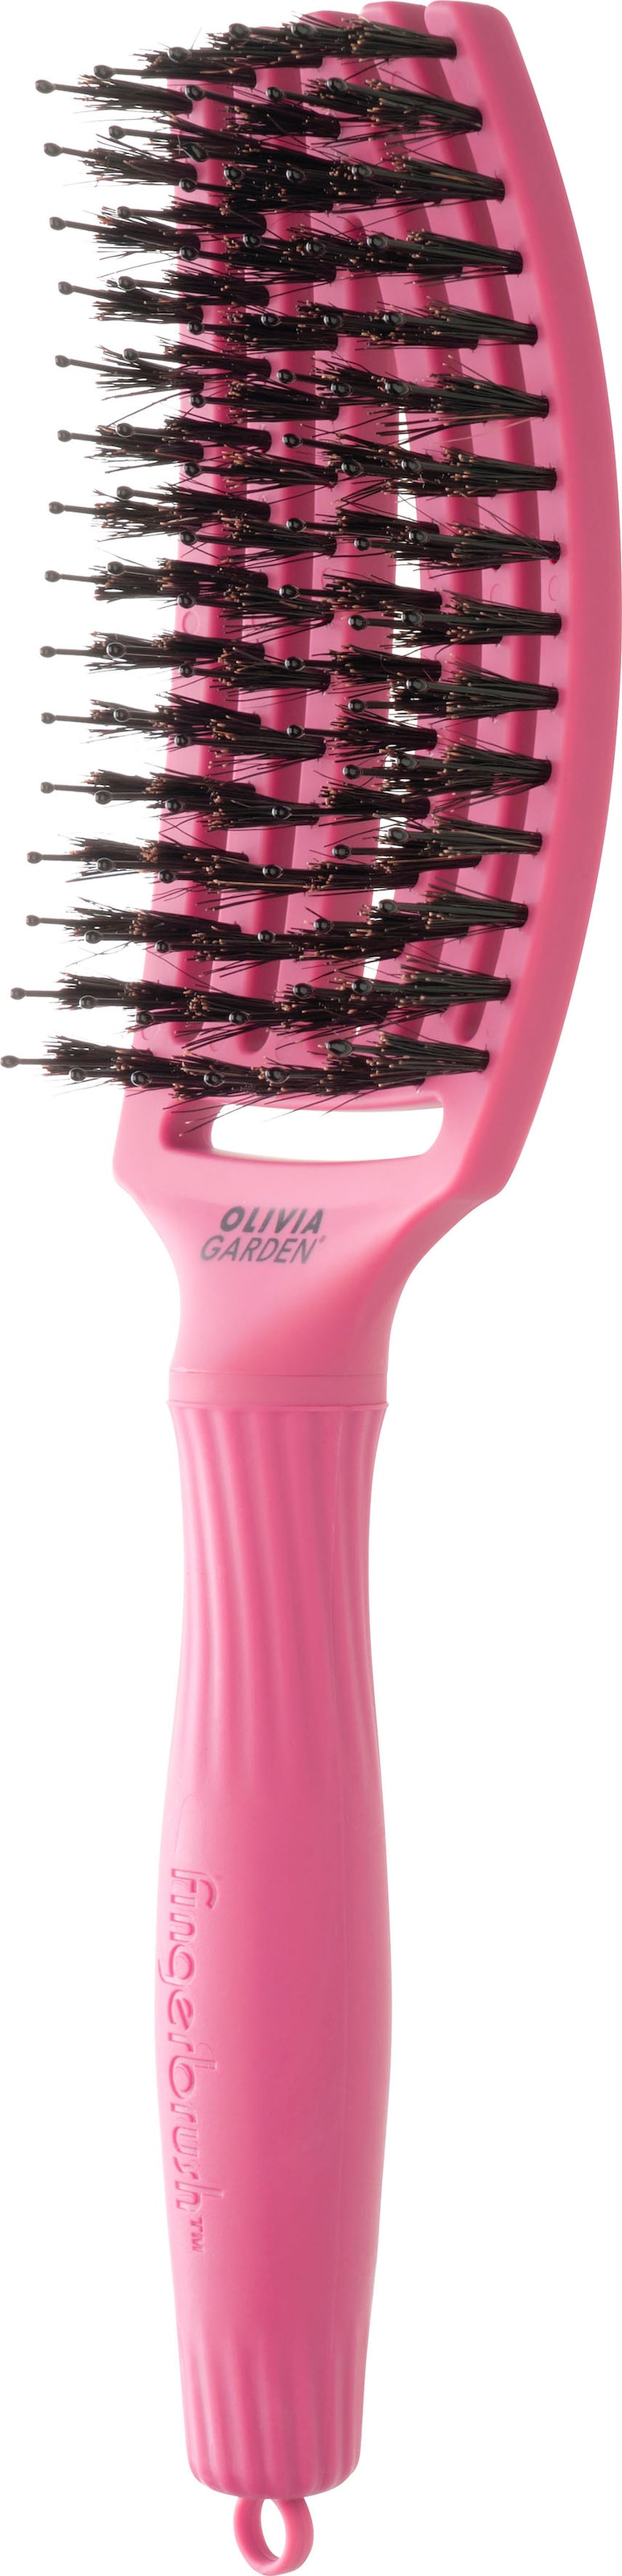 OLIVIA GARDEN Haarbürste »Fingerbrush 3 XXL Jahren Combo Garantie Medium« mit